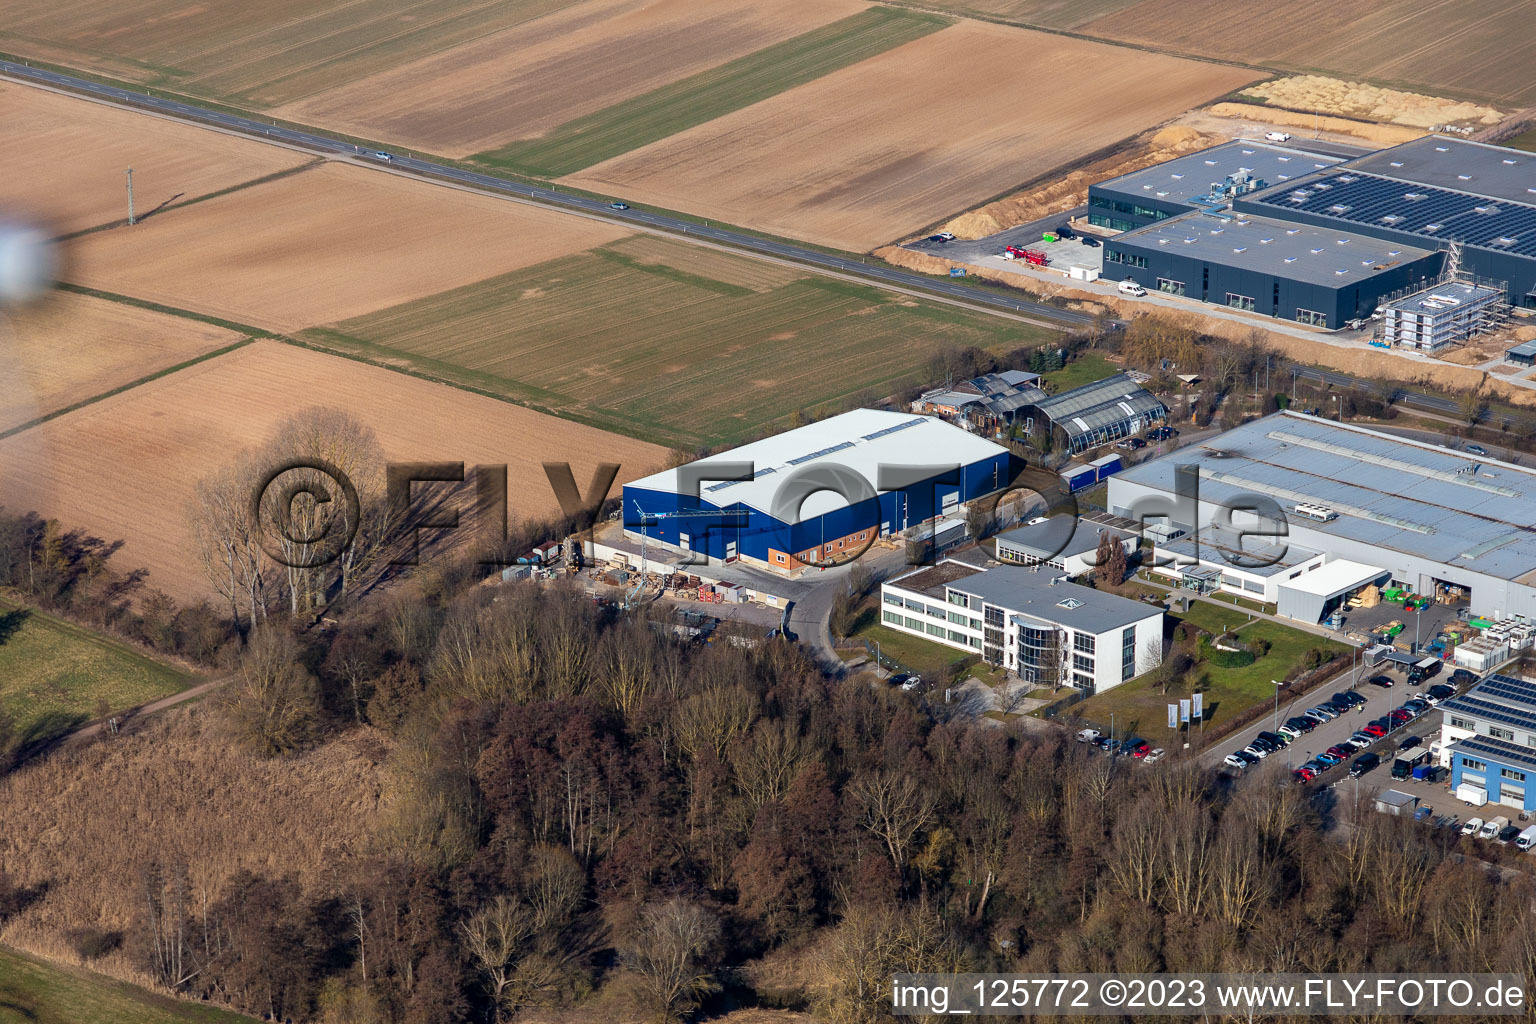 West Business Park, Martin Daum spatial concepts in the district Herxheim in Herxheim bei Landau/Pfalz in the state Rhineland-Palatinate, Germany